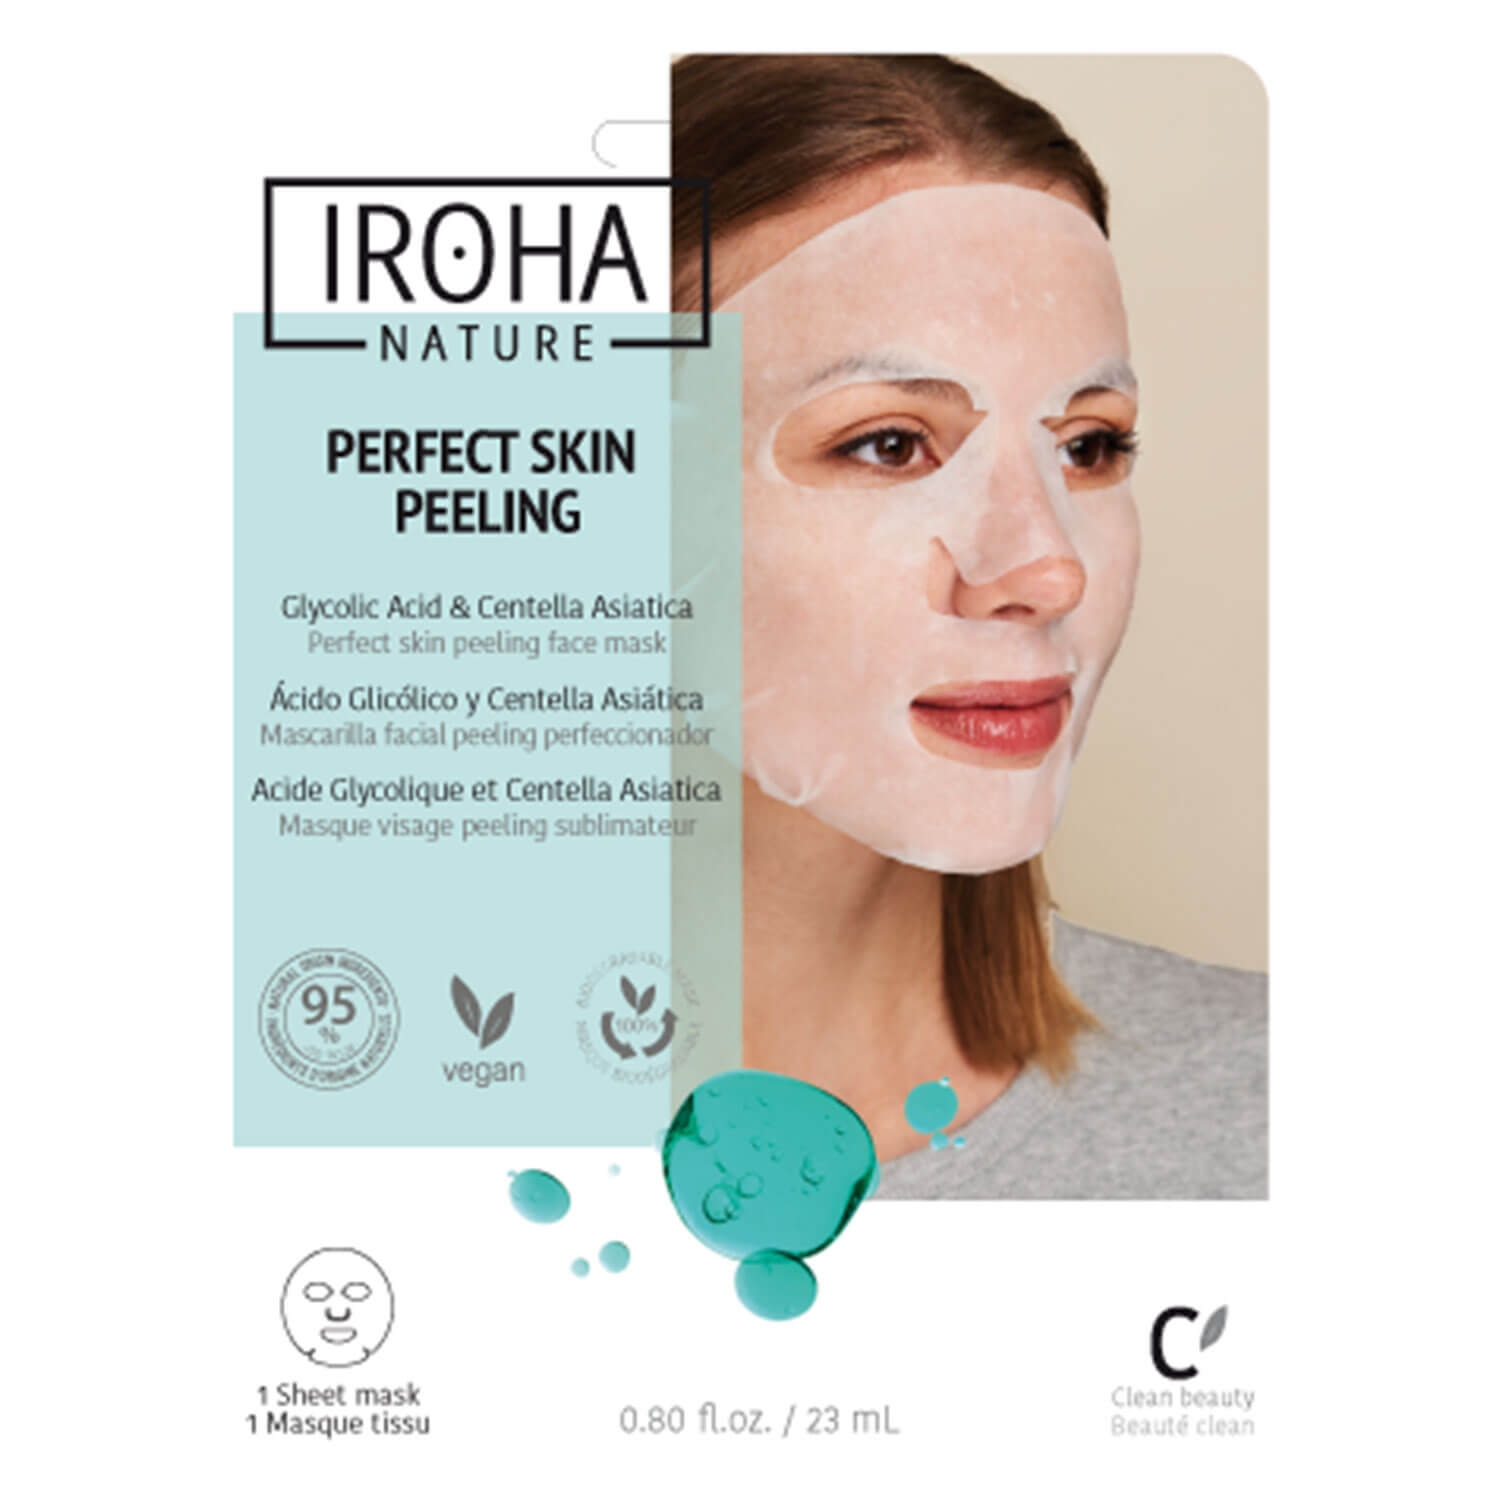 Product image from Iroha Nature - Perfect Skin Peeling Glycolic Acid & Centella Asiatica Face Mask